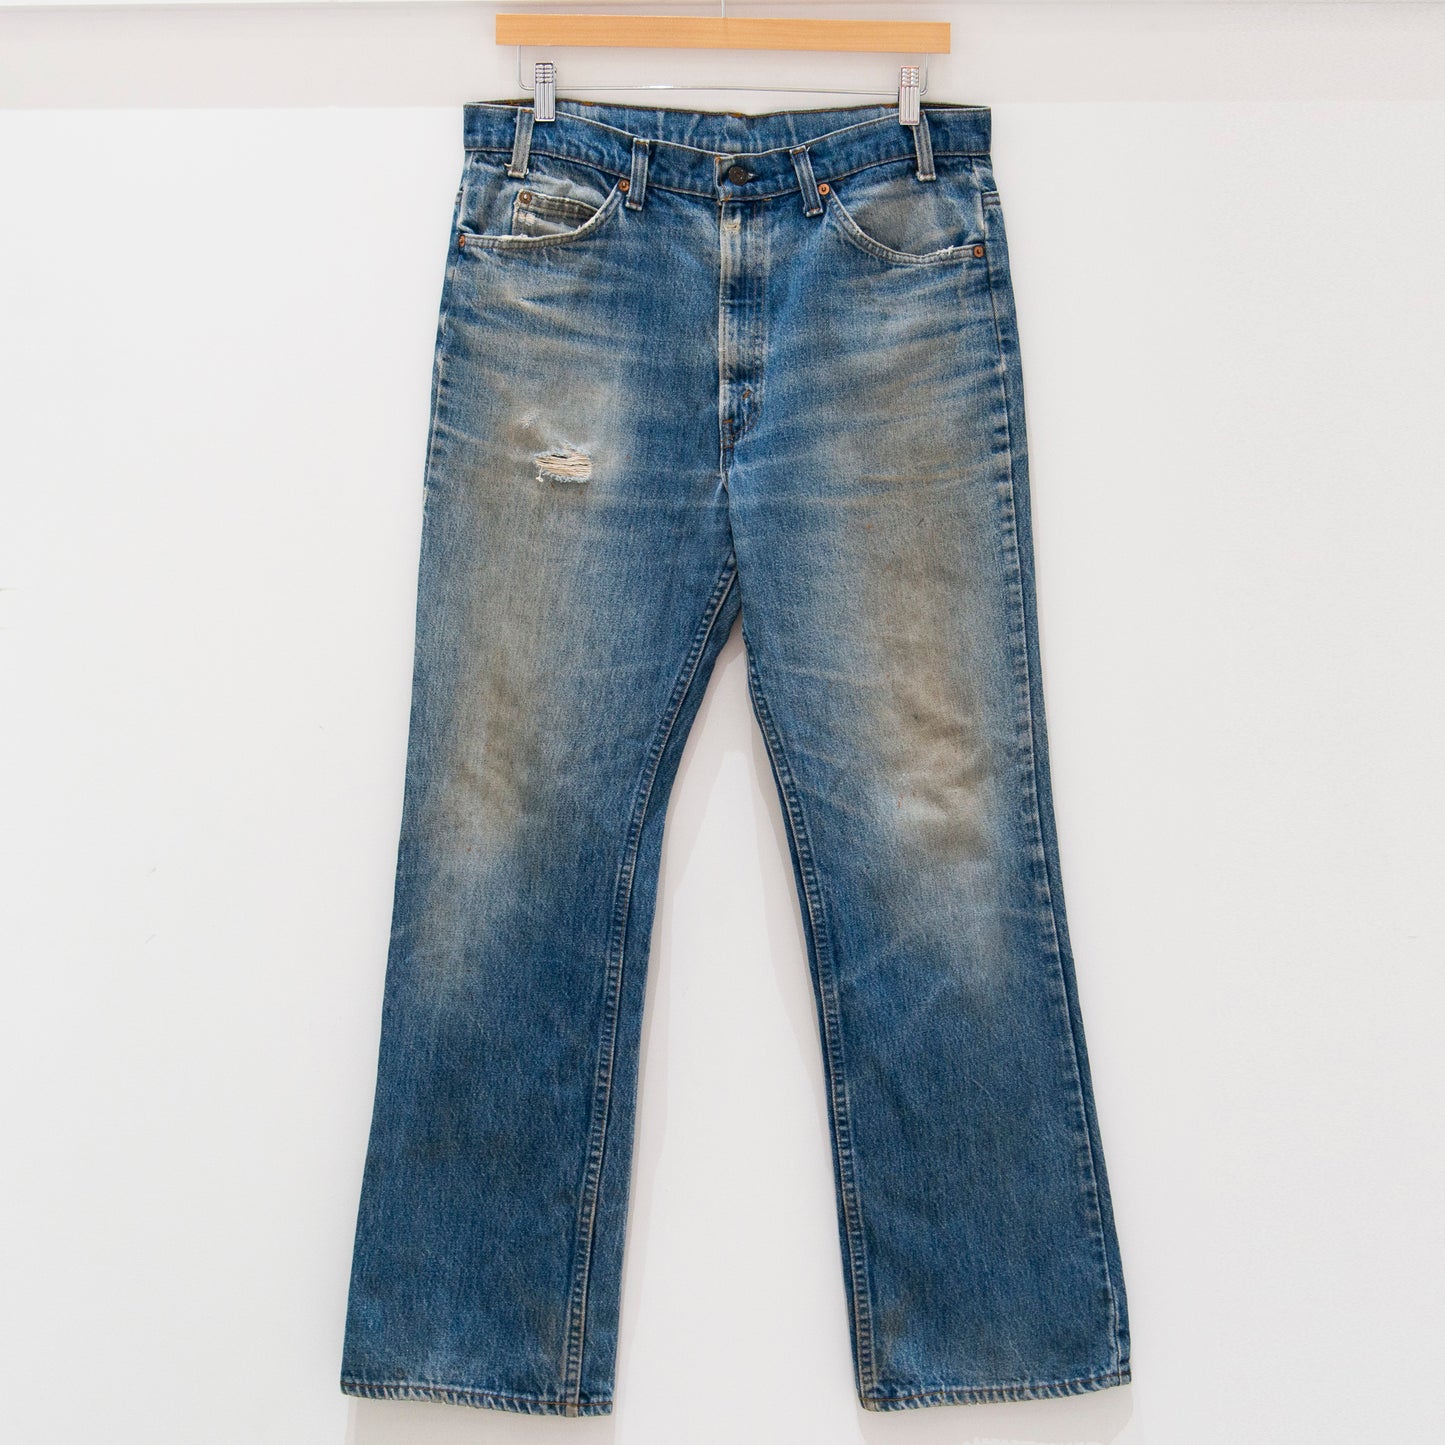 80's Levi's 20517-0217 Orange Tab Jeans 34"